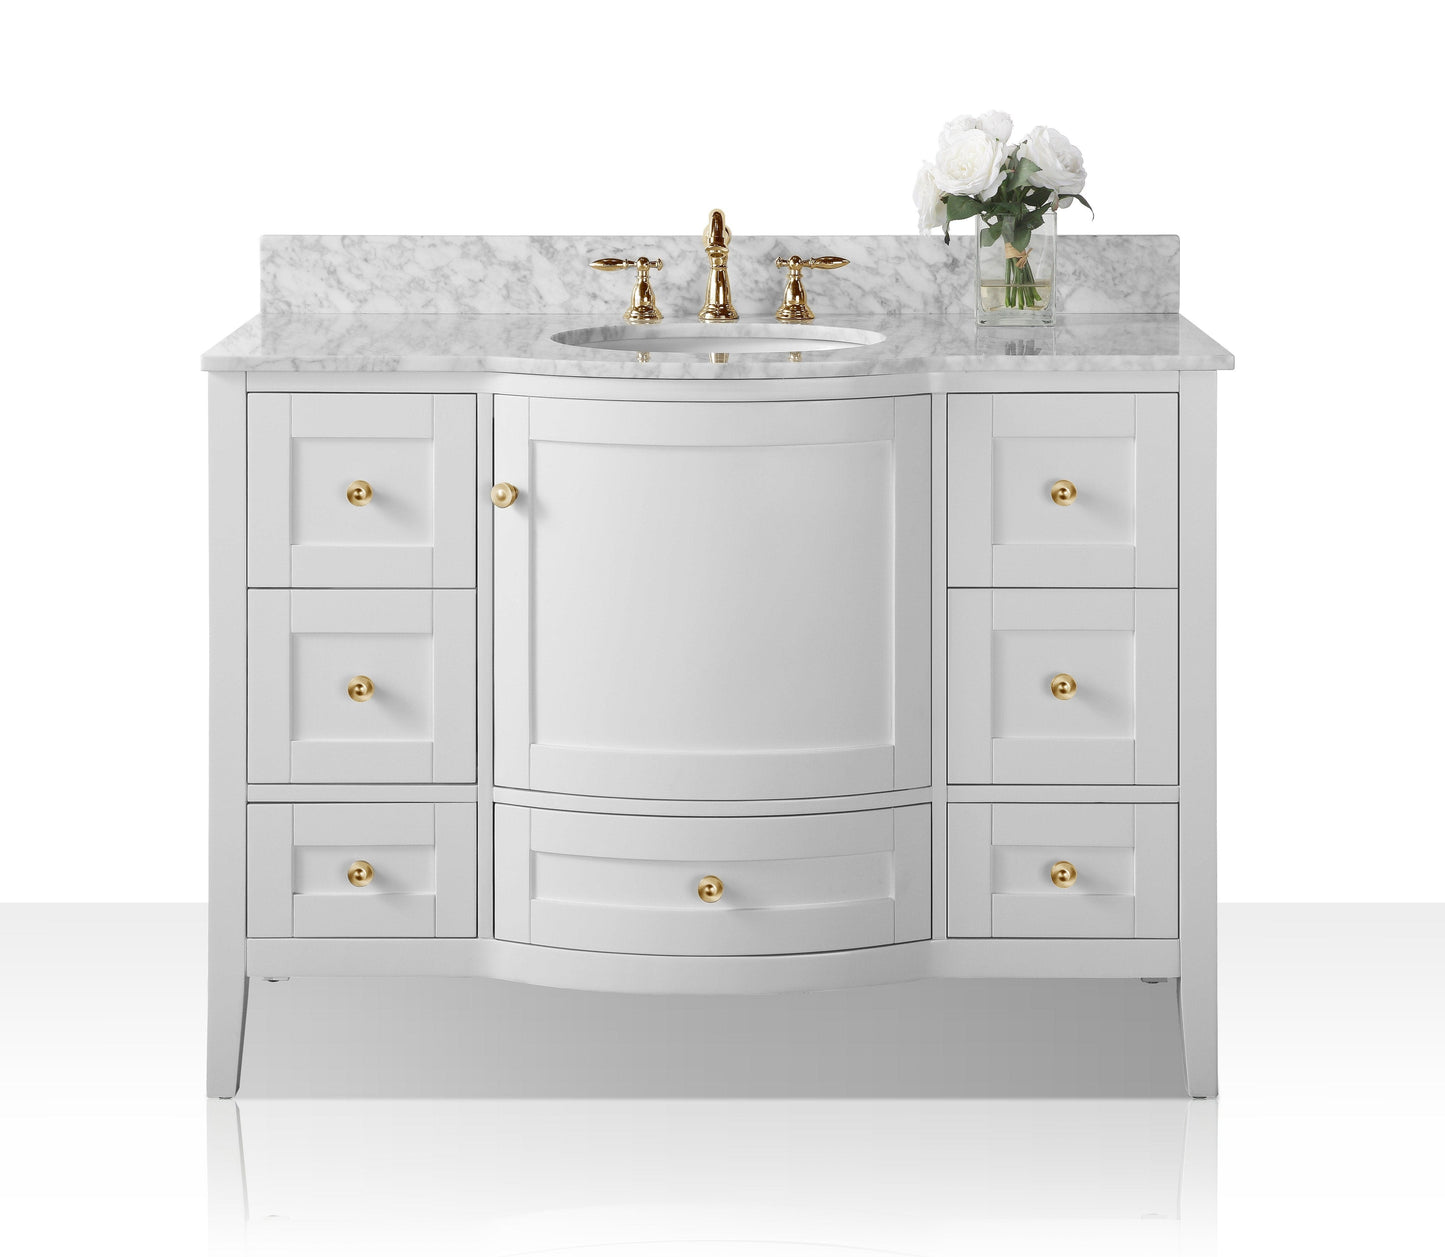 Ancerra Designs Lauren 48 in. Bath Vanity Set in White with 28 in. Mirror